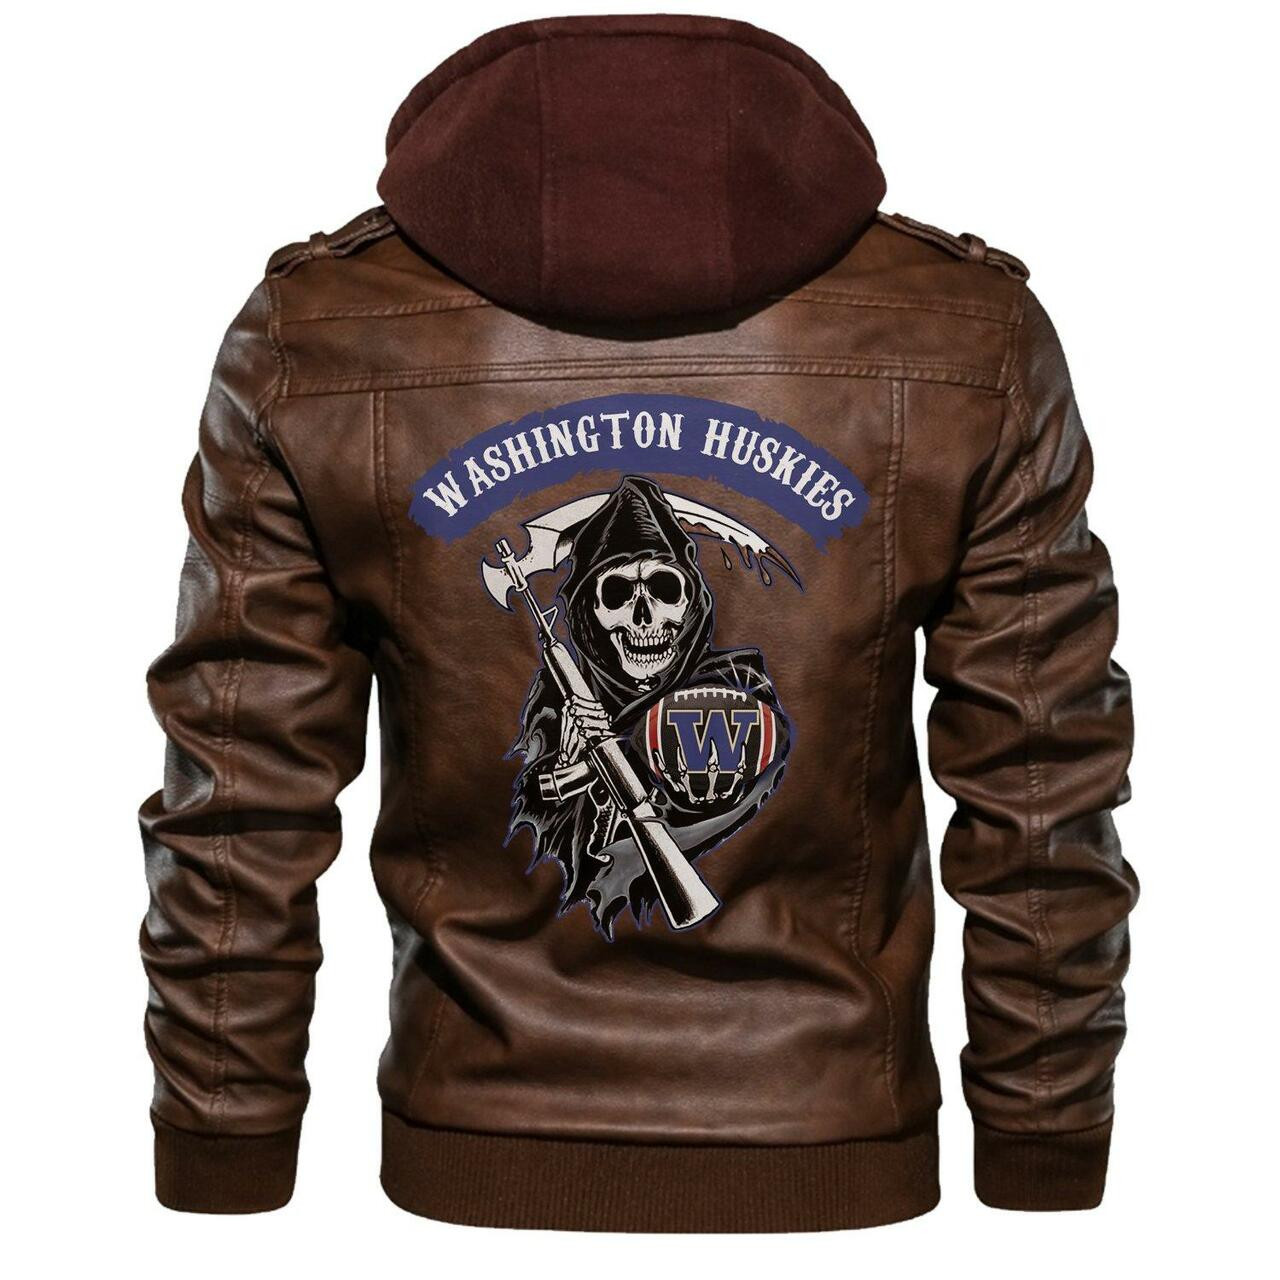 Top leather jacket Sells Best on Techcomshop 9